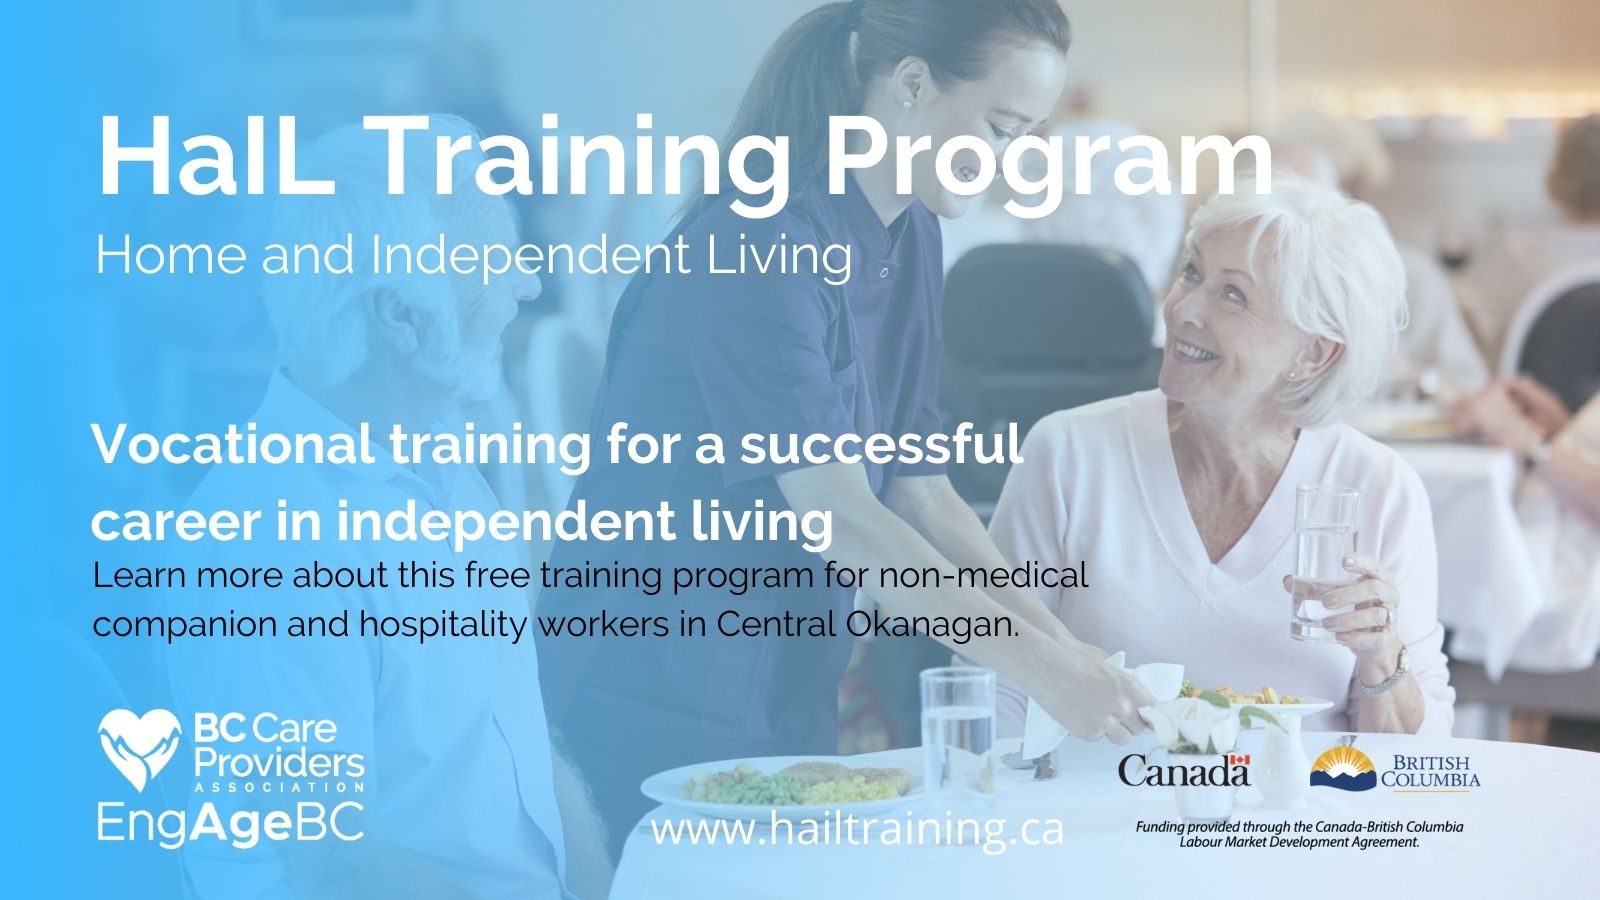 Media Release: HaIL Training Program provides opportunities for people to help seniors